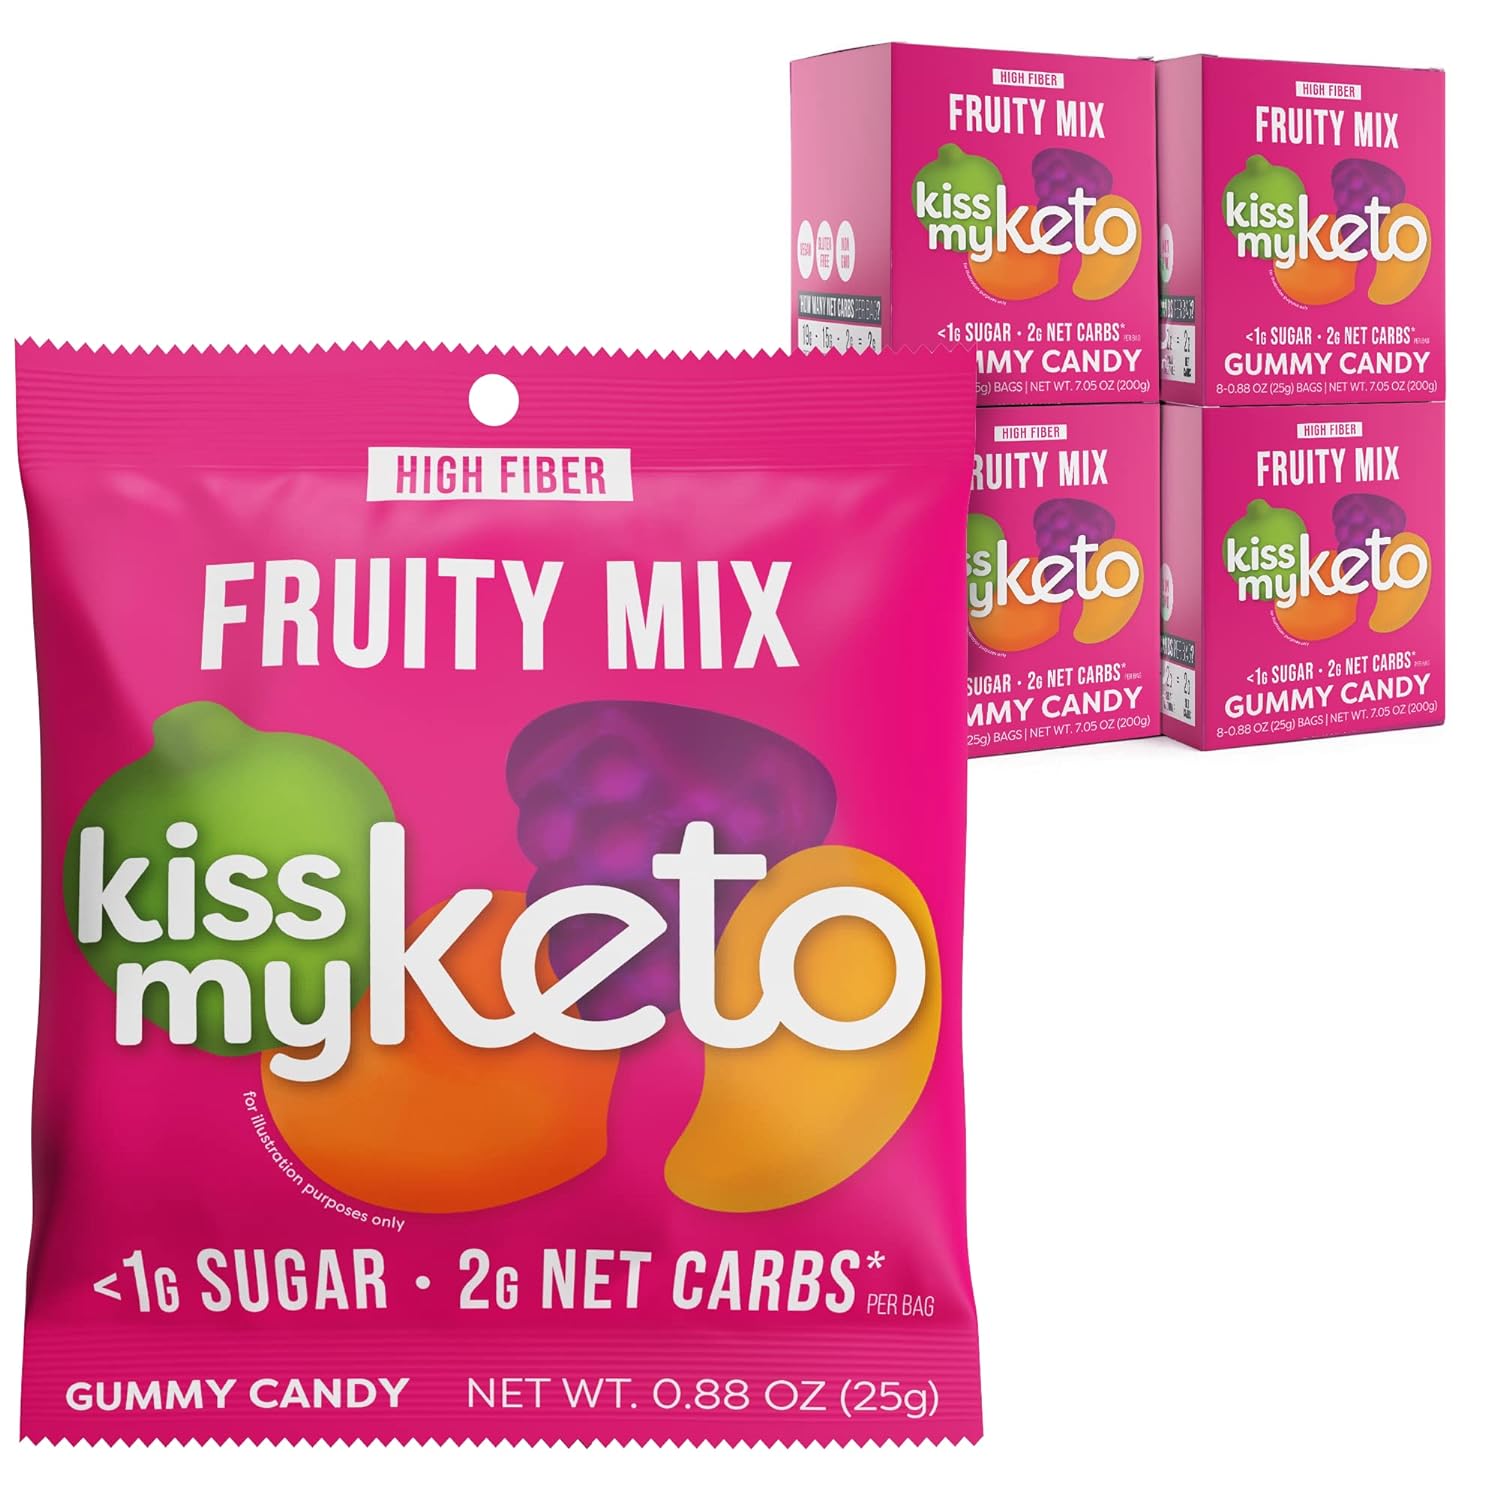 Kiss my keto Gummy Candy Fruity Mix Vegan less than 1g sugar 25g